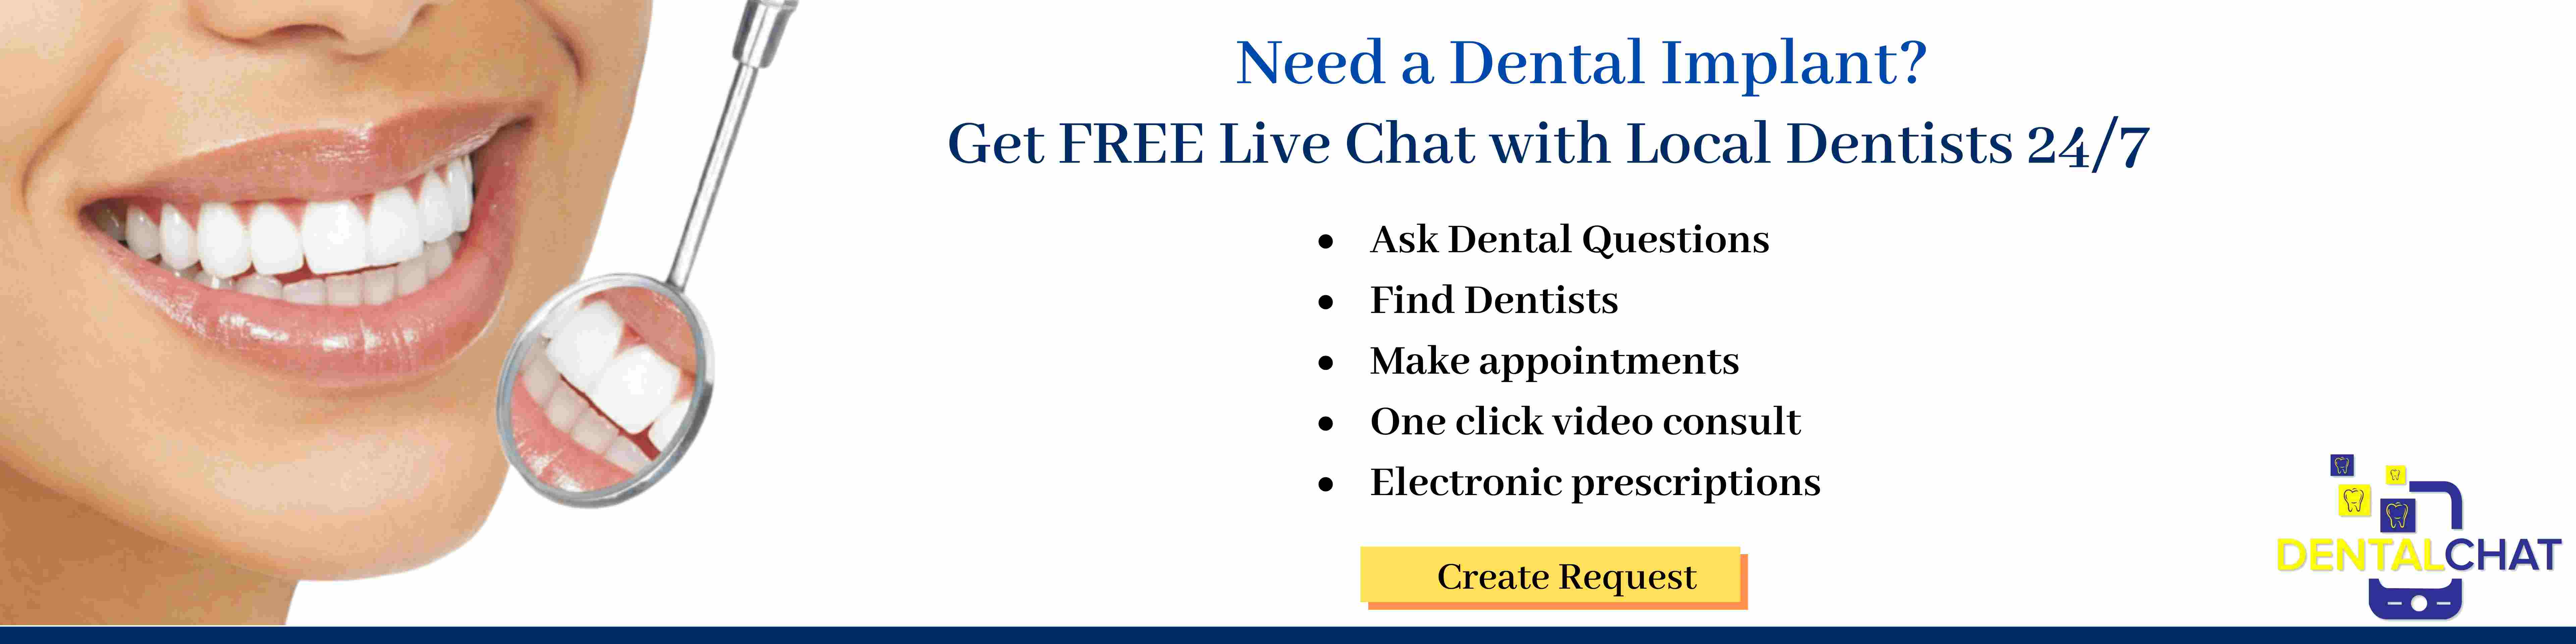 Local Dental Implants Online Blog, Dental Implant Placement Discussion, dental implants info